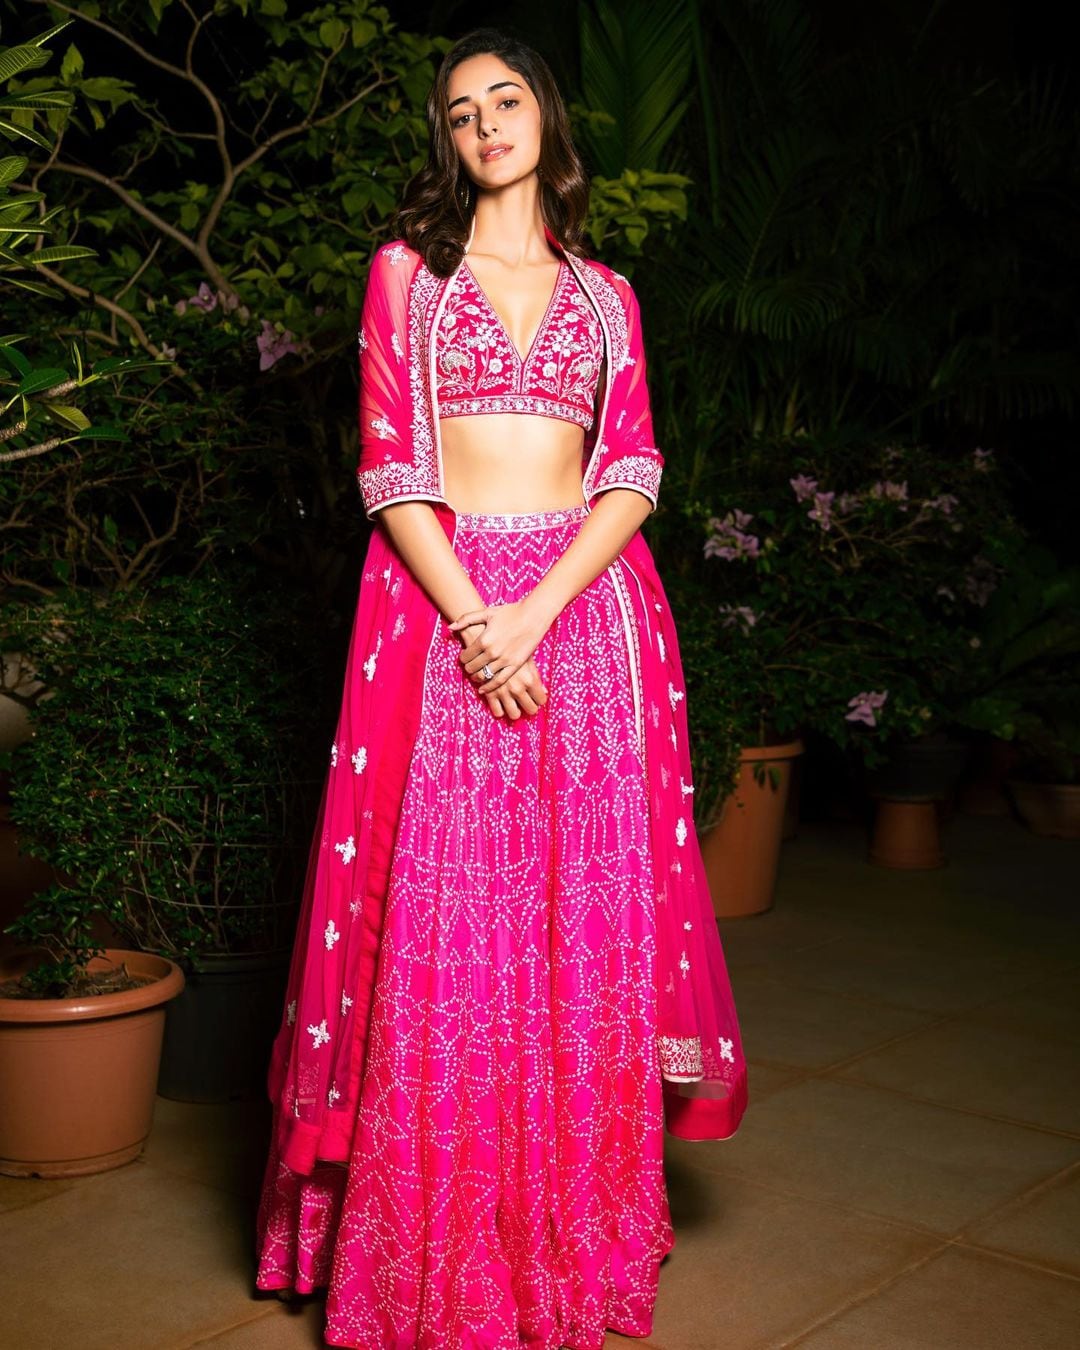 Ananya Panday's embellished pink lehenga is pretty and vibrant.